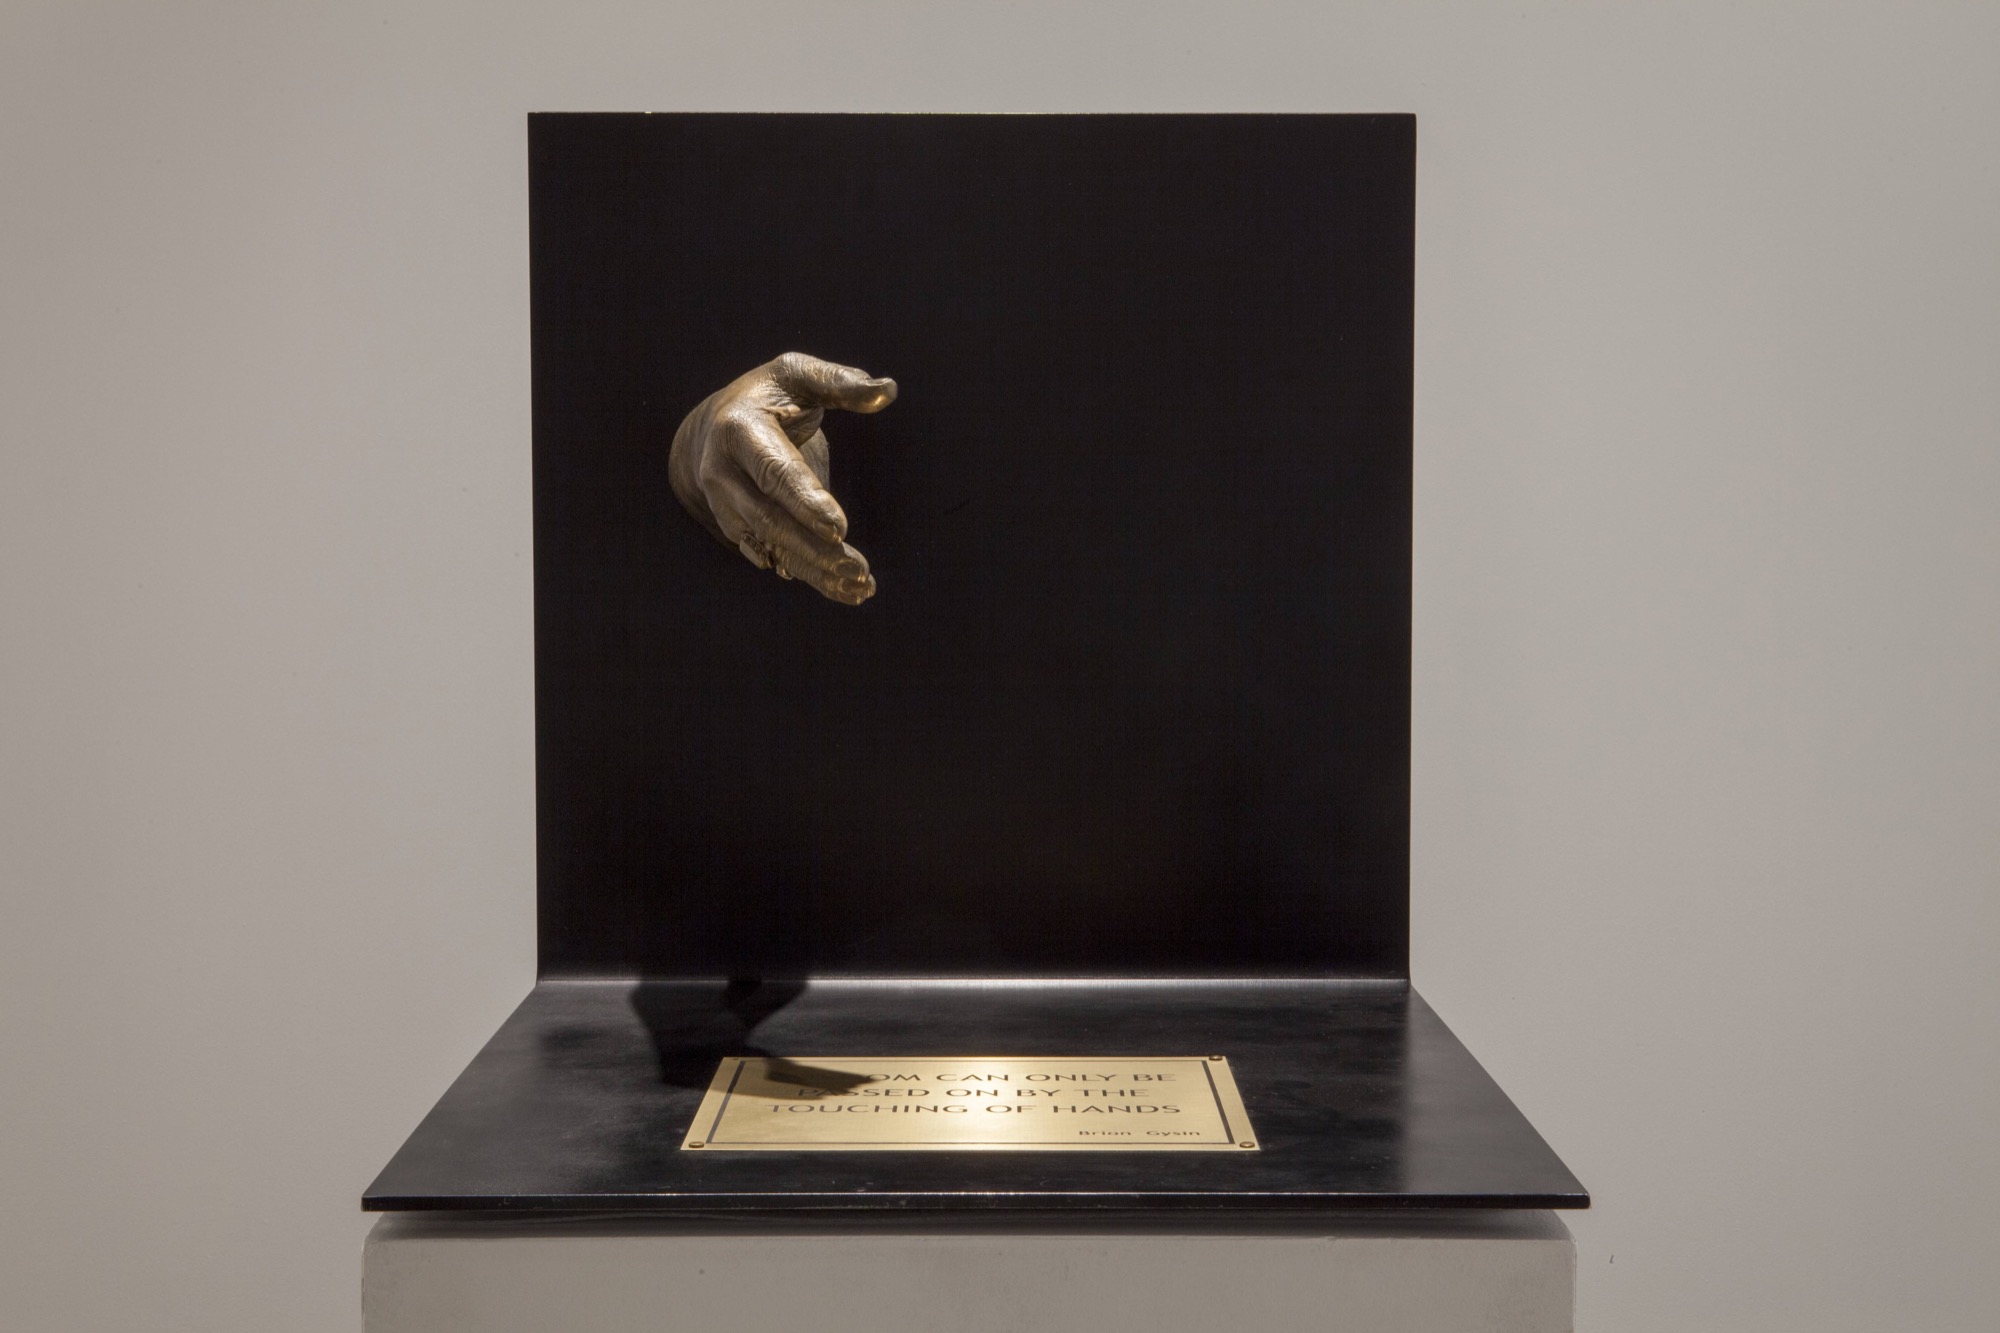 Genesis Breyer P-Orridge, Touching of Hands, 2016, Bronze, brass, steel, patina 51 x 51 x 50cm. Photograph by Adam Stone.